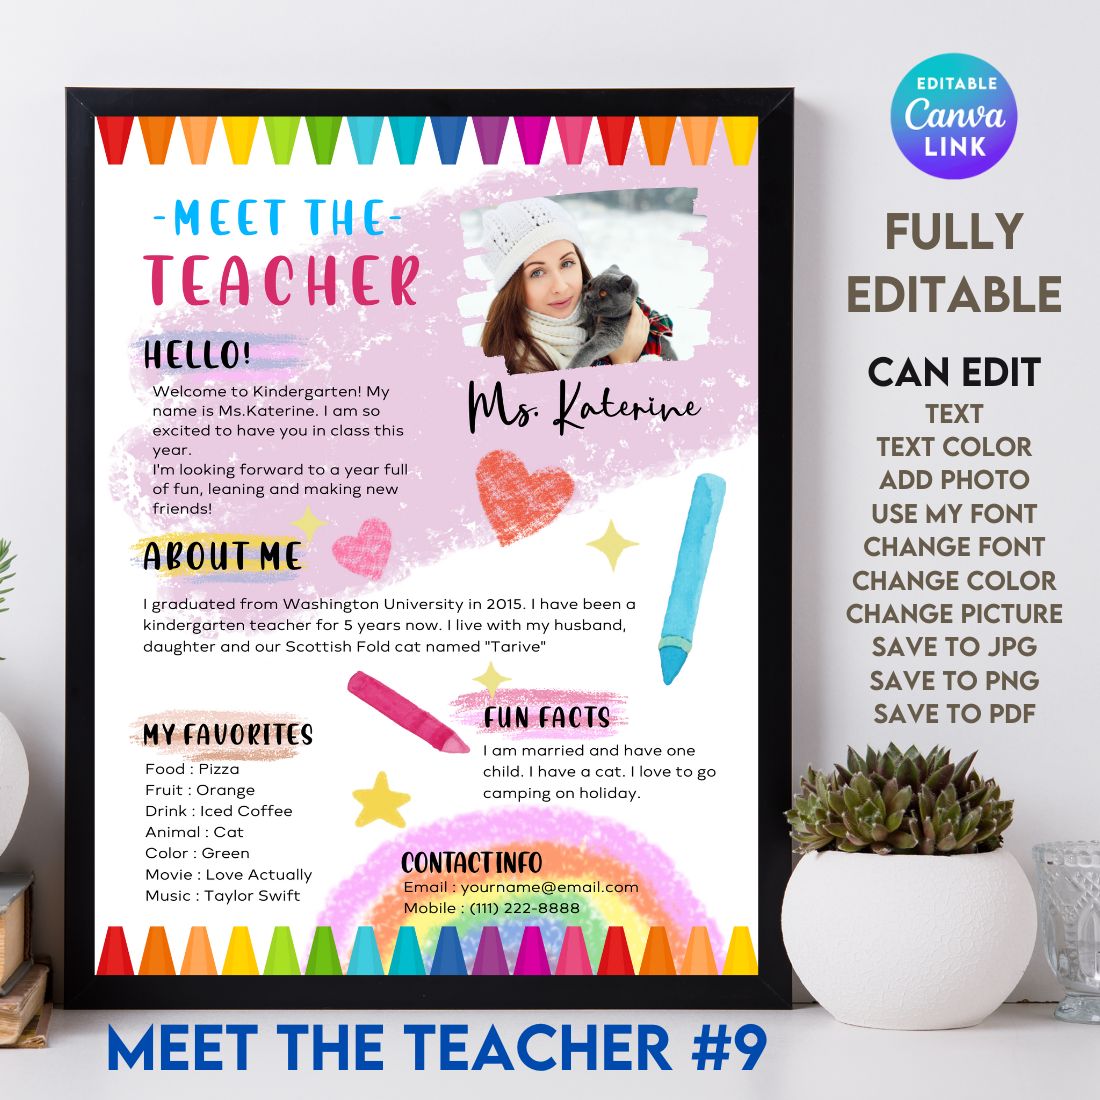 Meet The Teacher #9 – Canva Template cover image.